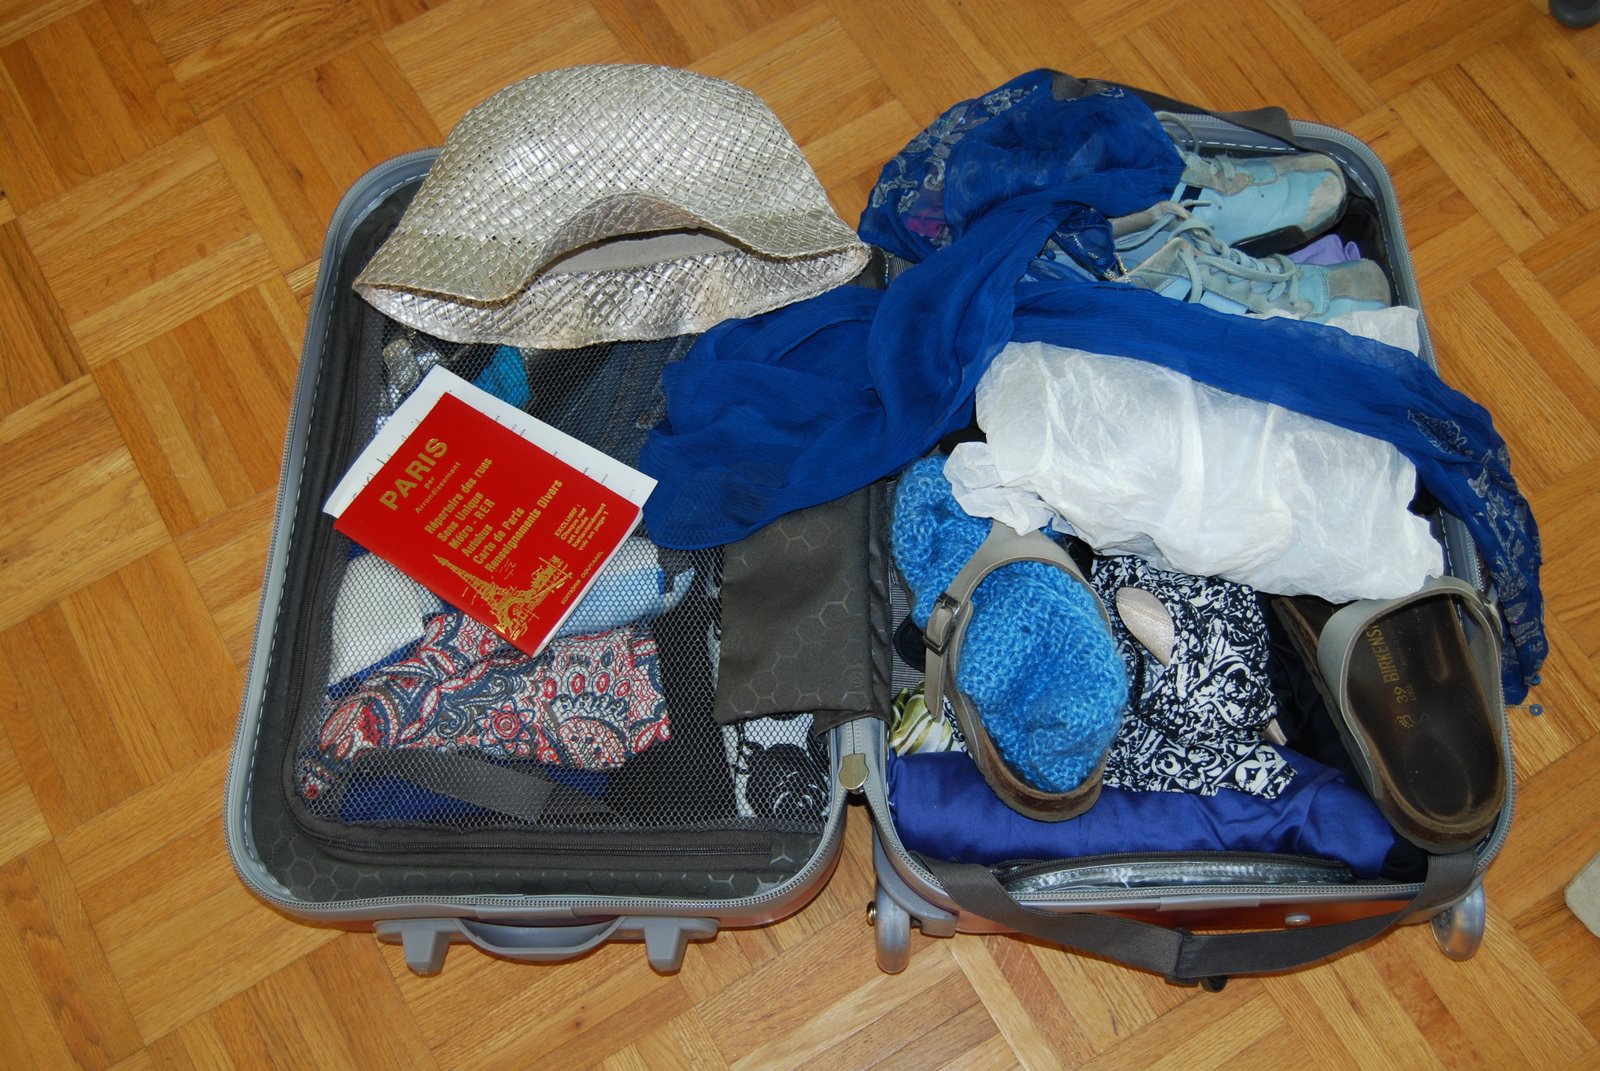 paris packing, part two